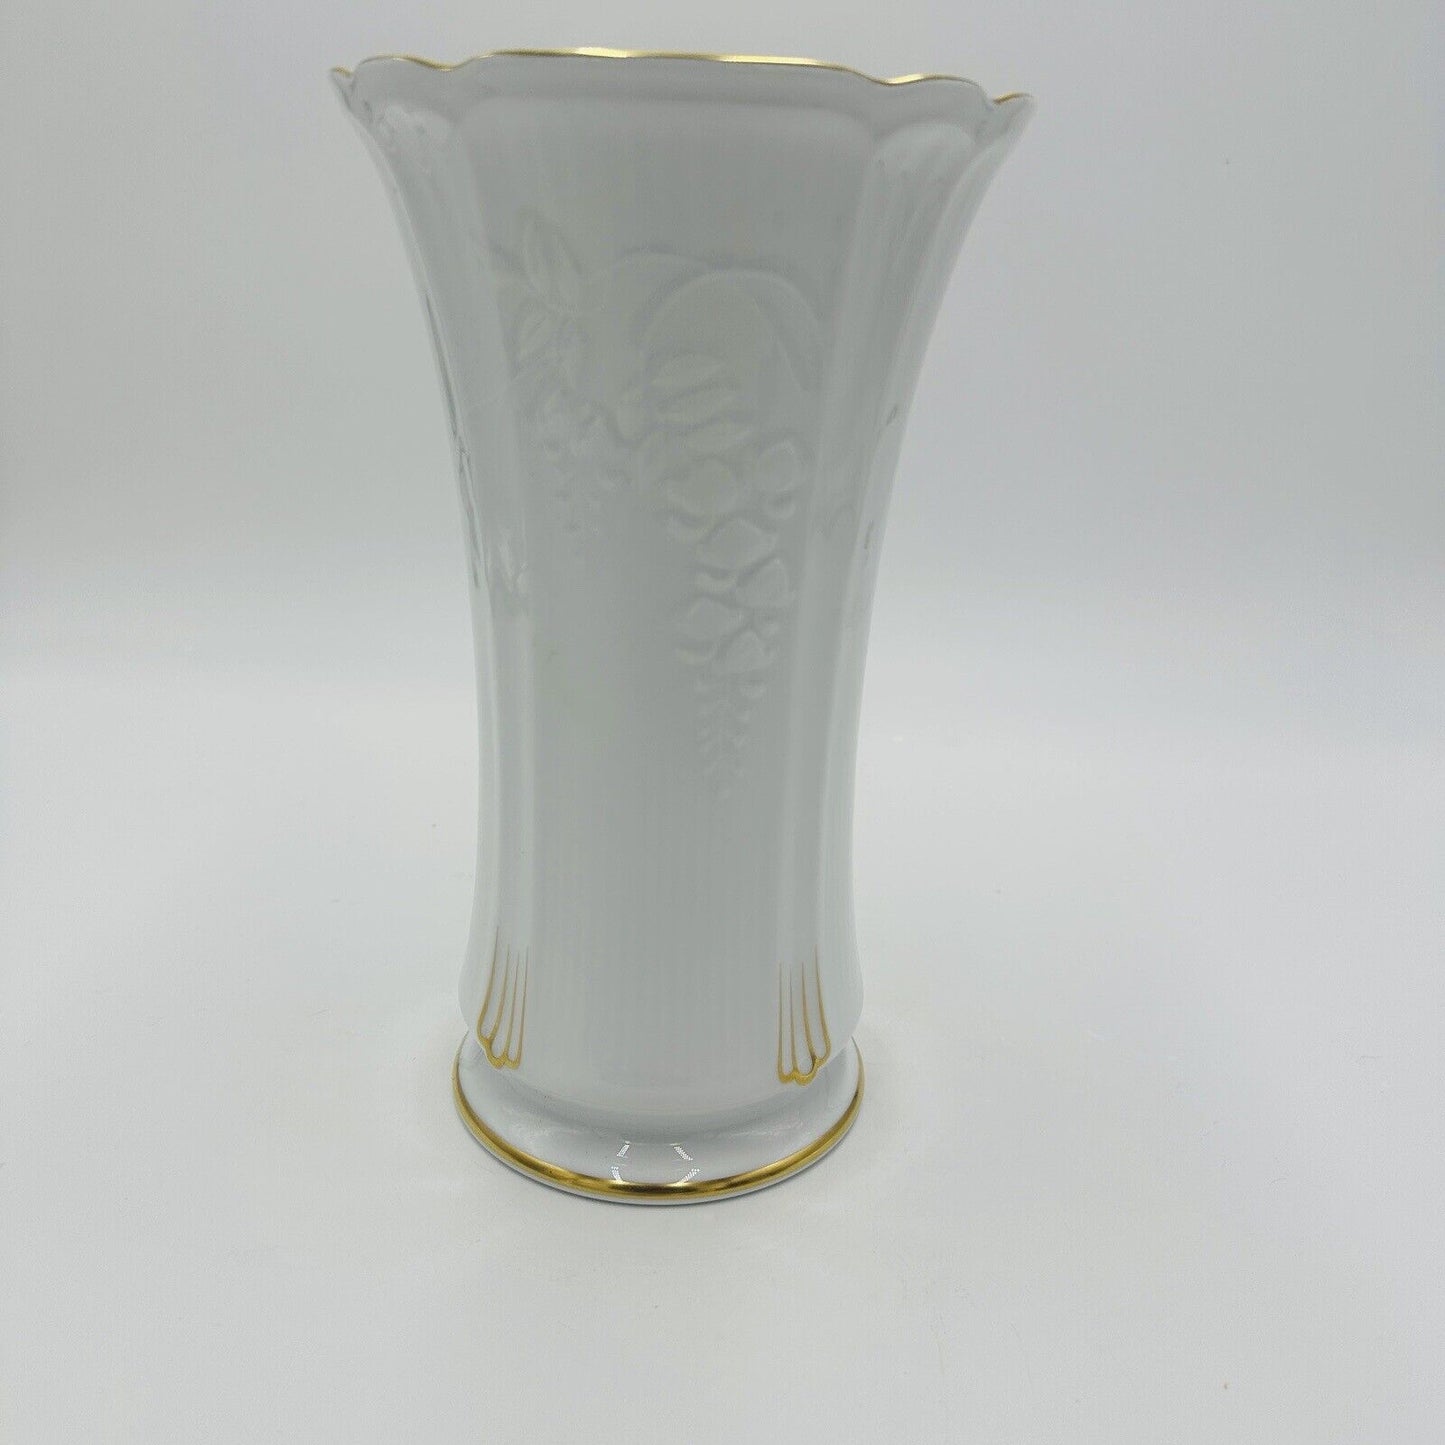 Okura Porcelain White Gold Vase Commemorative Morimura Bros Japan 9”H